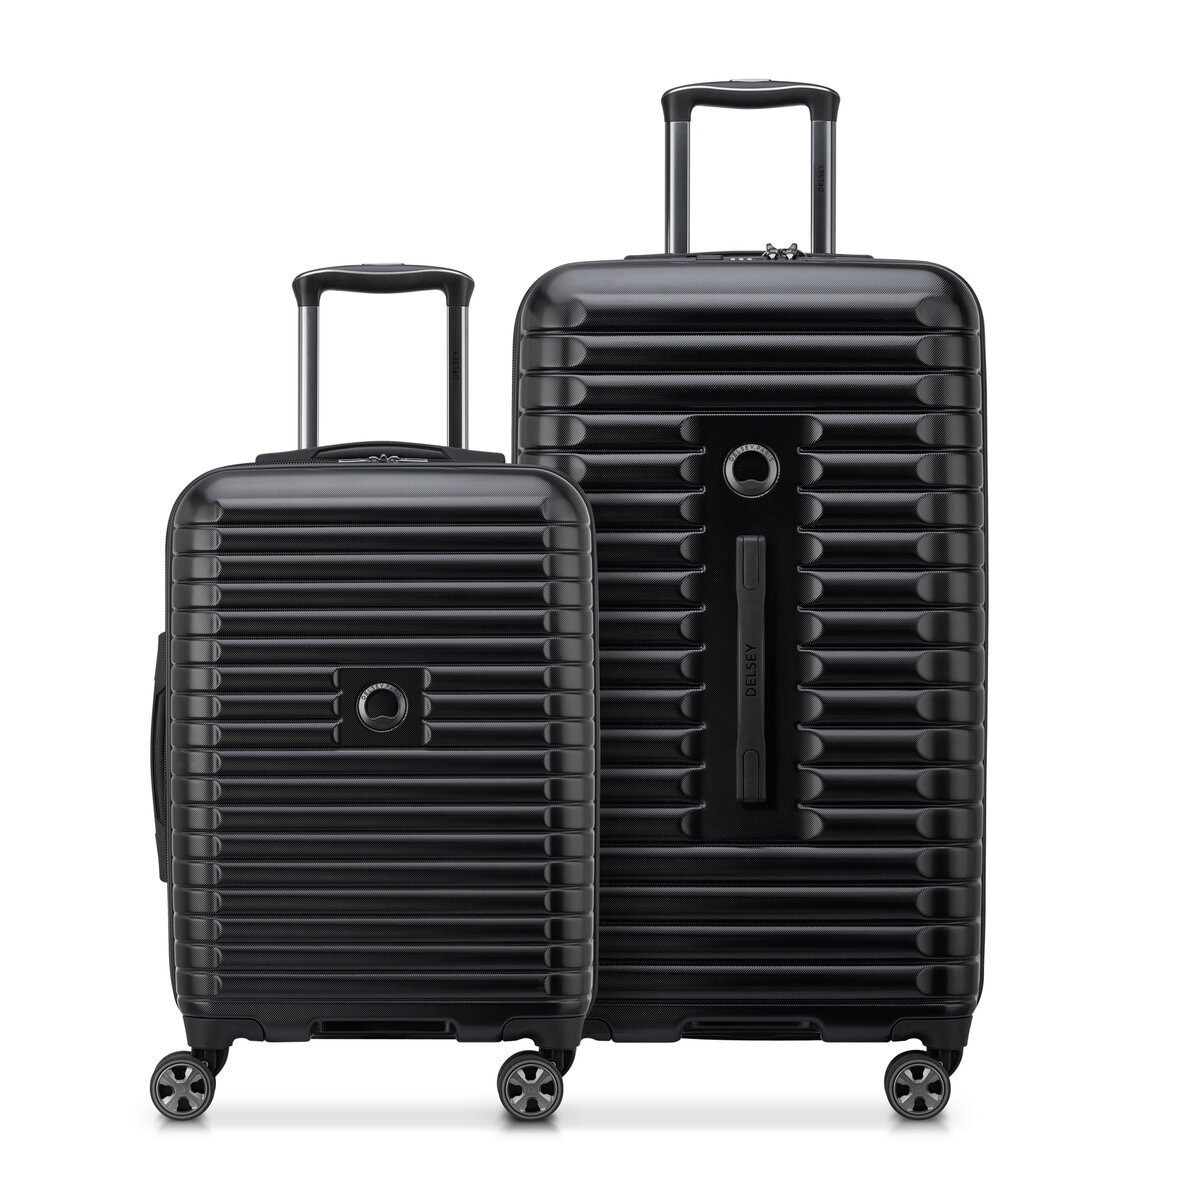 Delsey スーツケース - 旅行用品